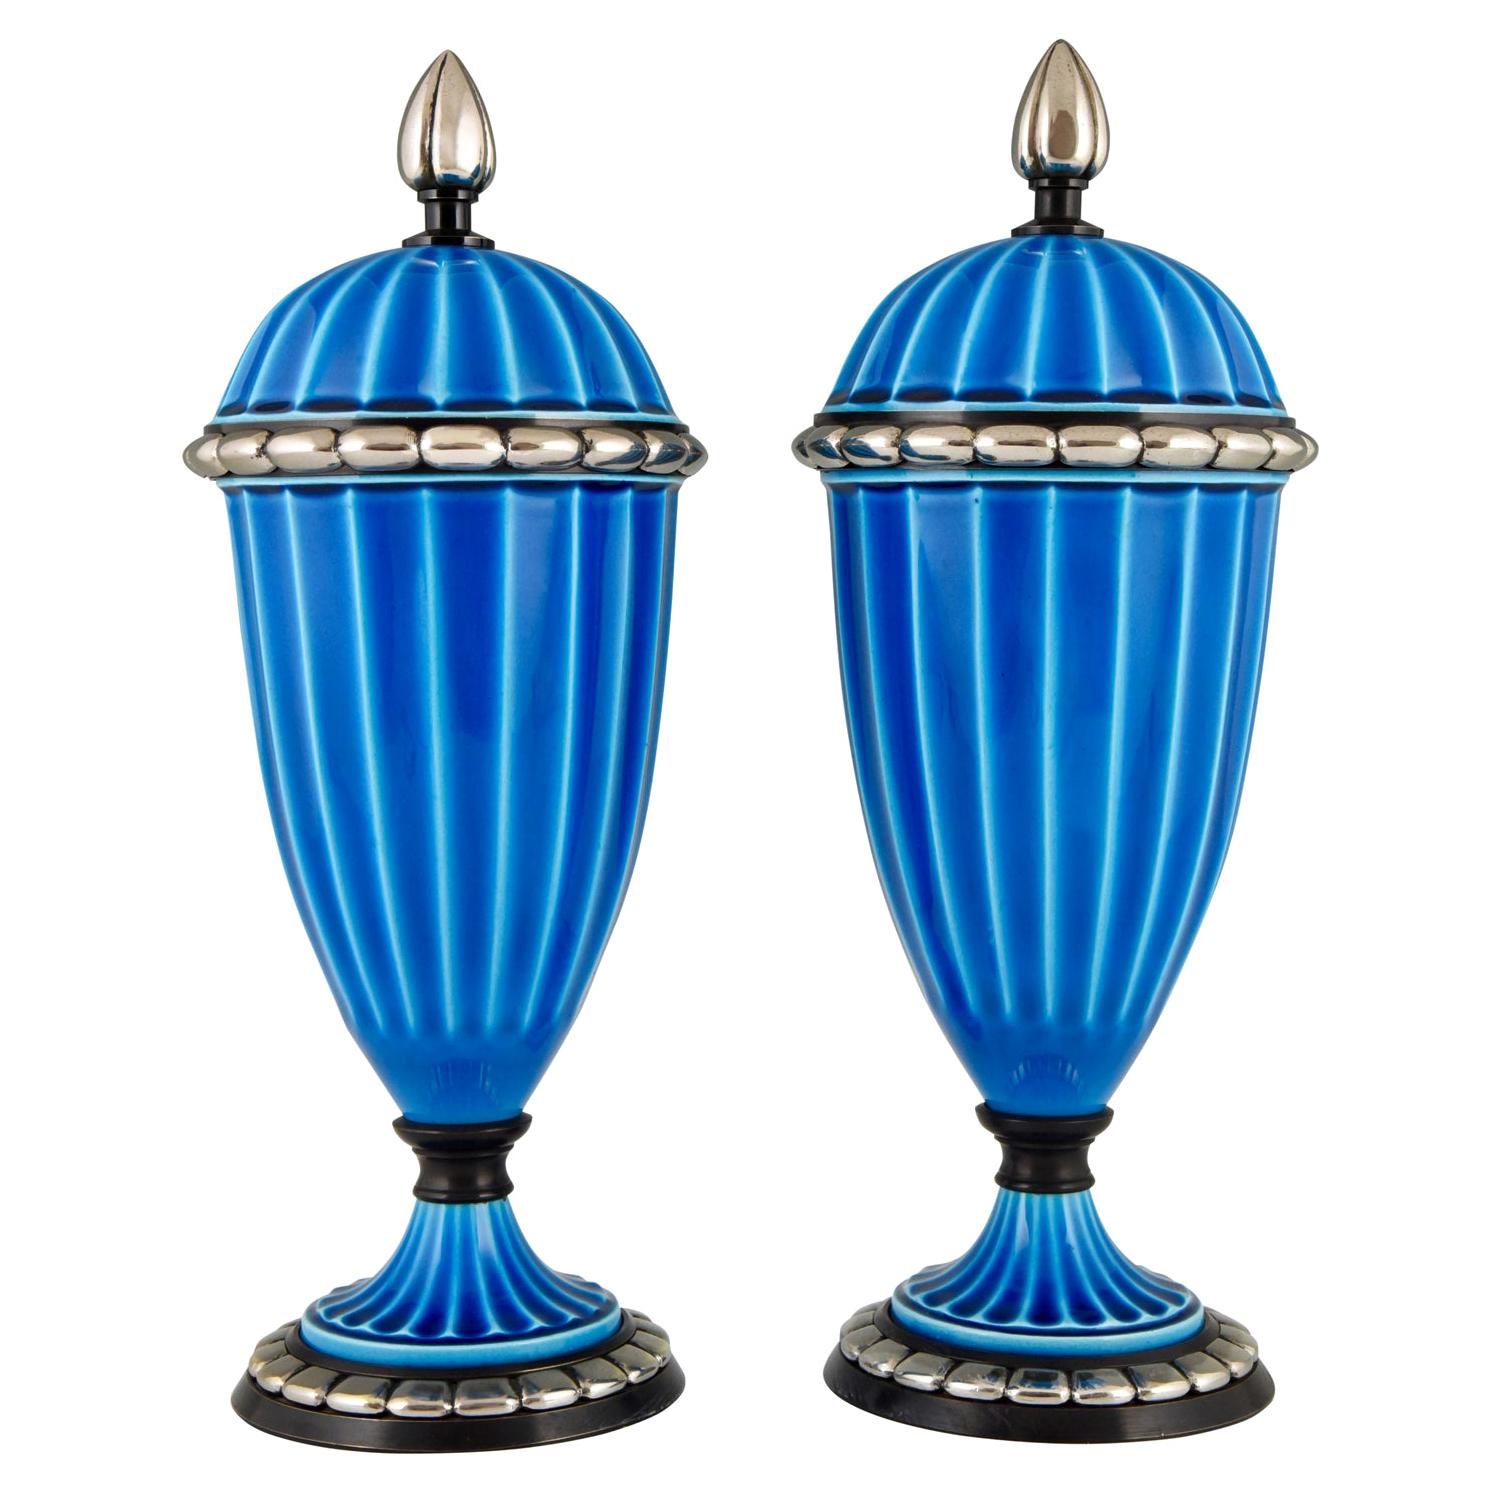 Pair of Art Deco Ceramic Vases or Urns with Blue Glaze Paul Milet for Sèvres